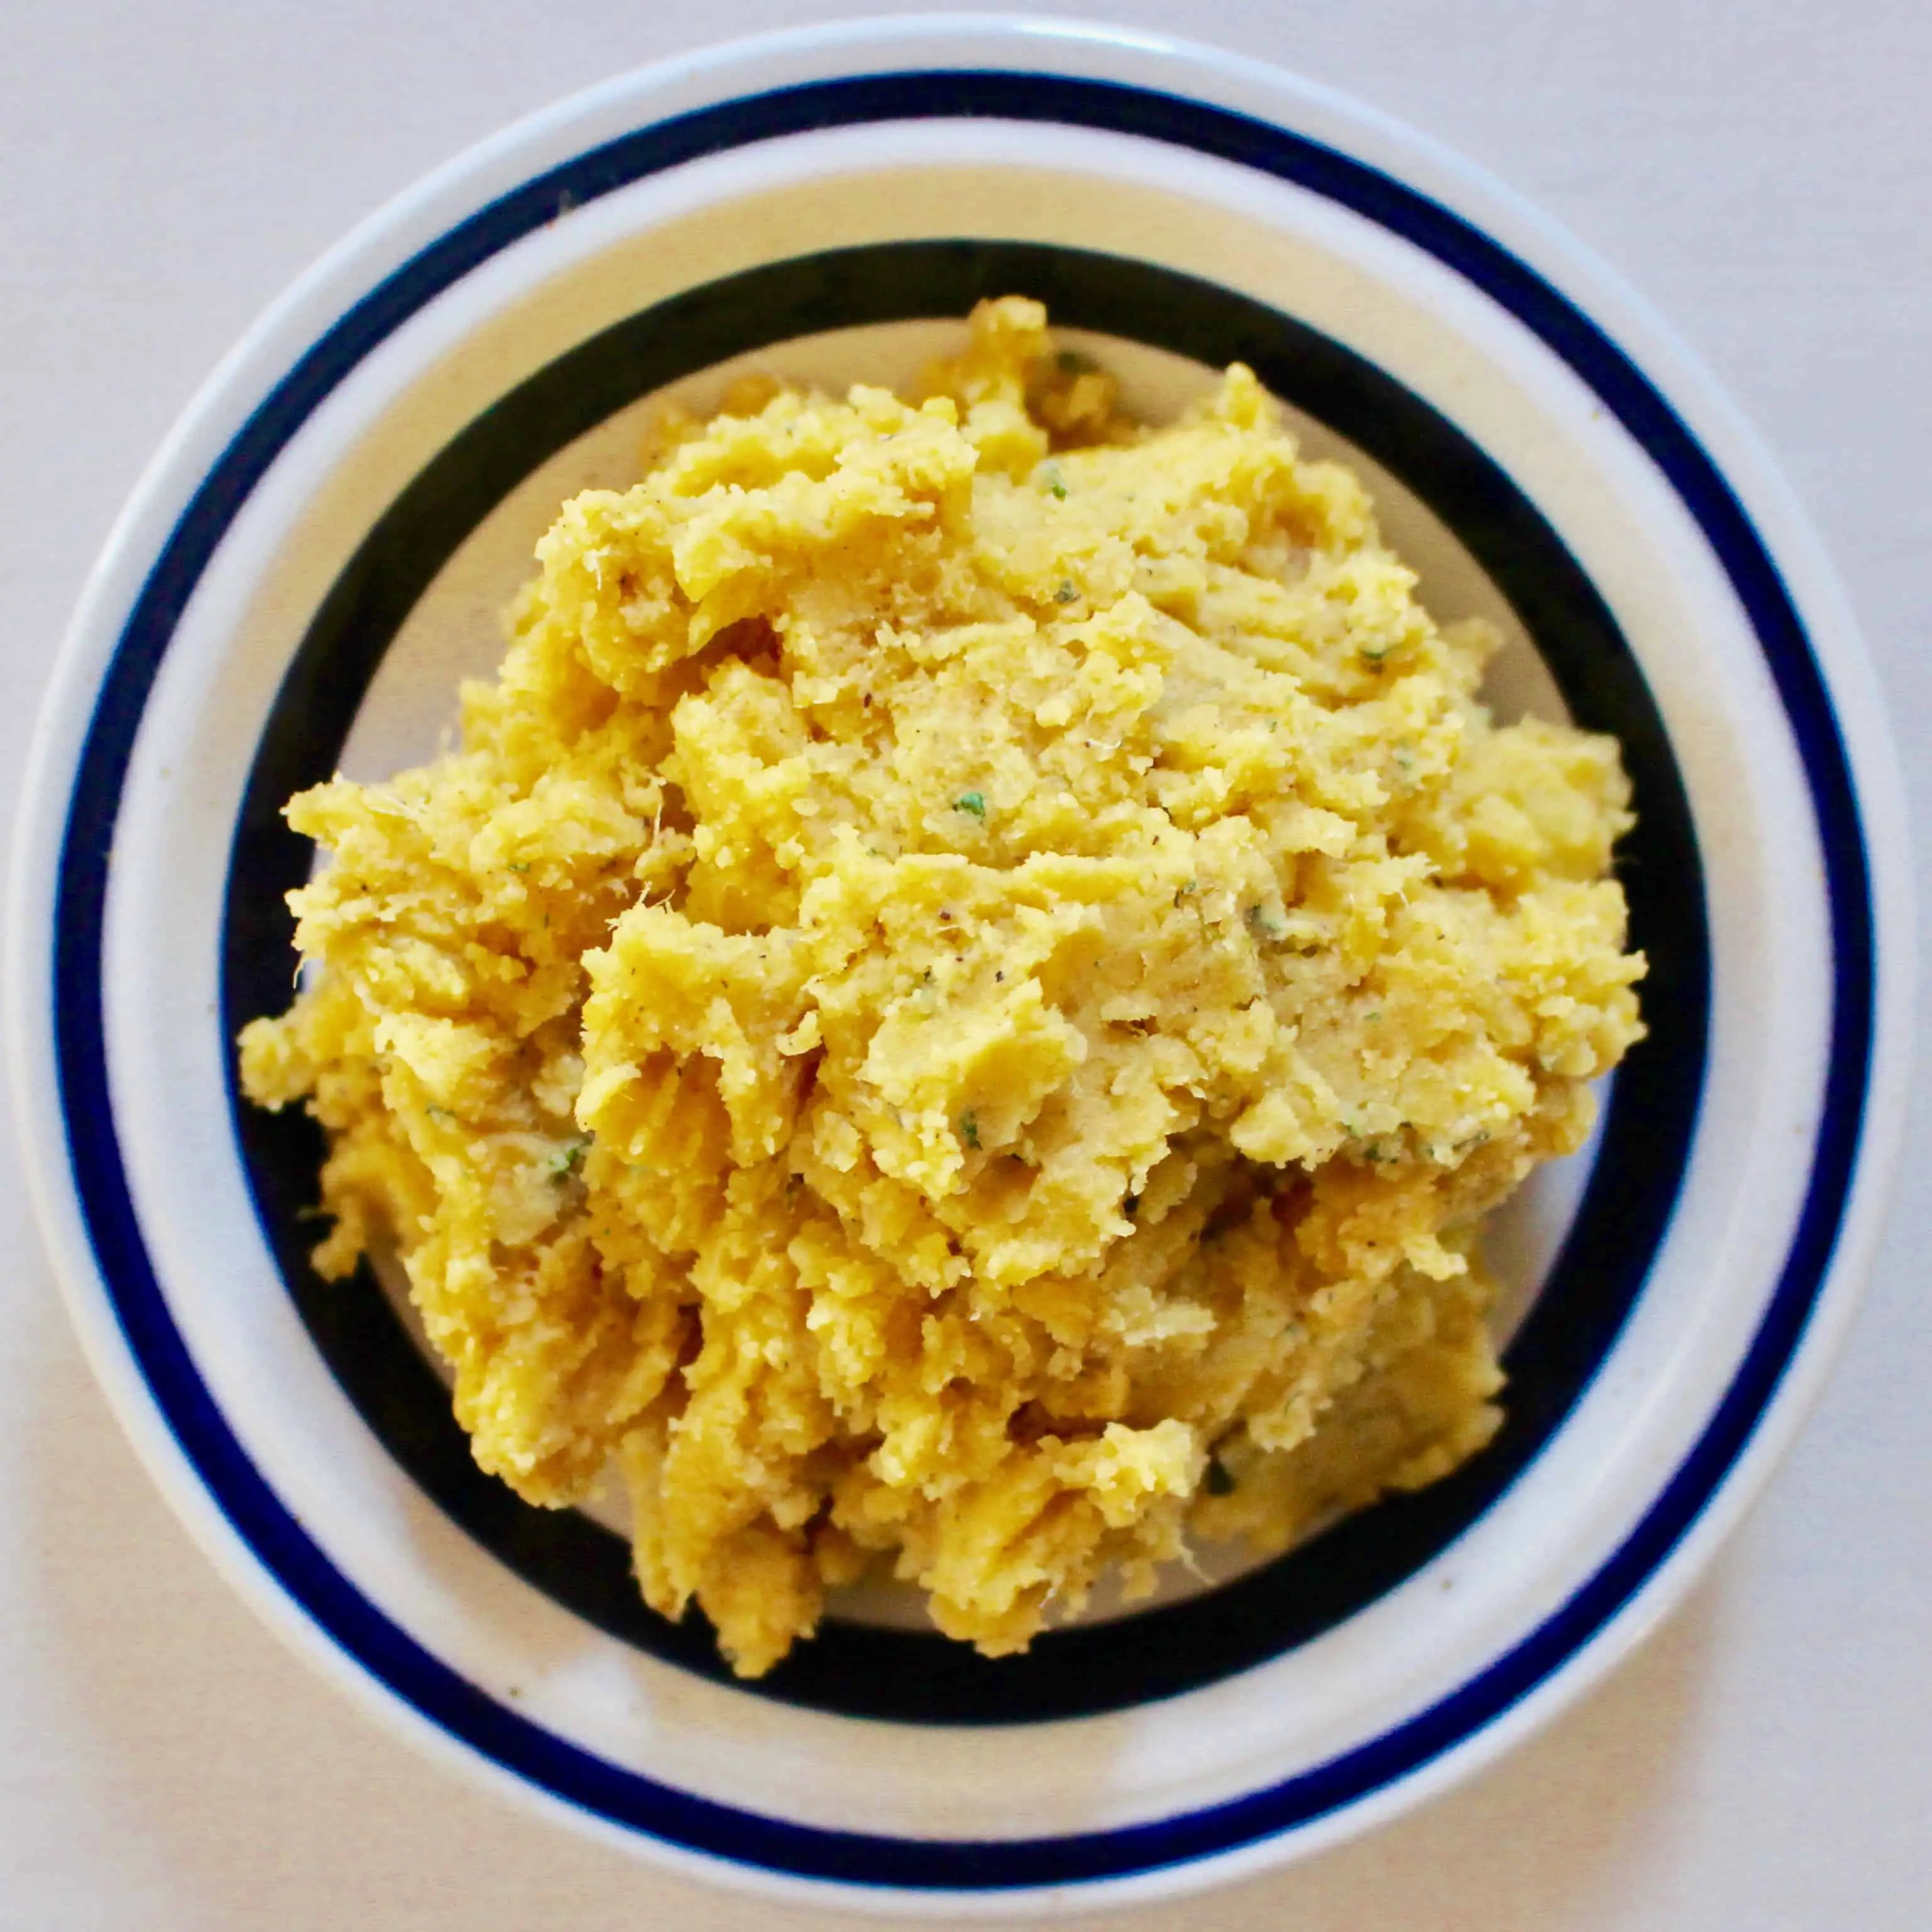 Sweet potato hummus in a white bowl with a dark blue rim